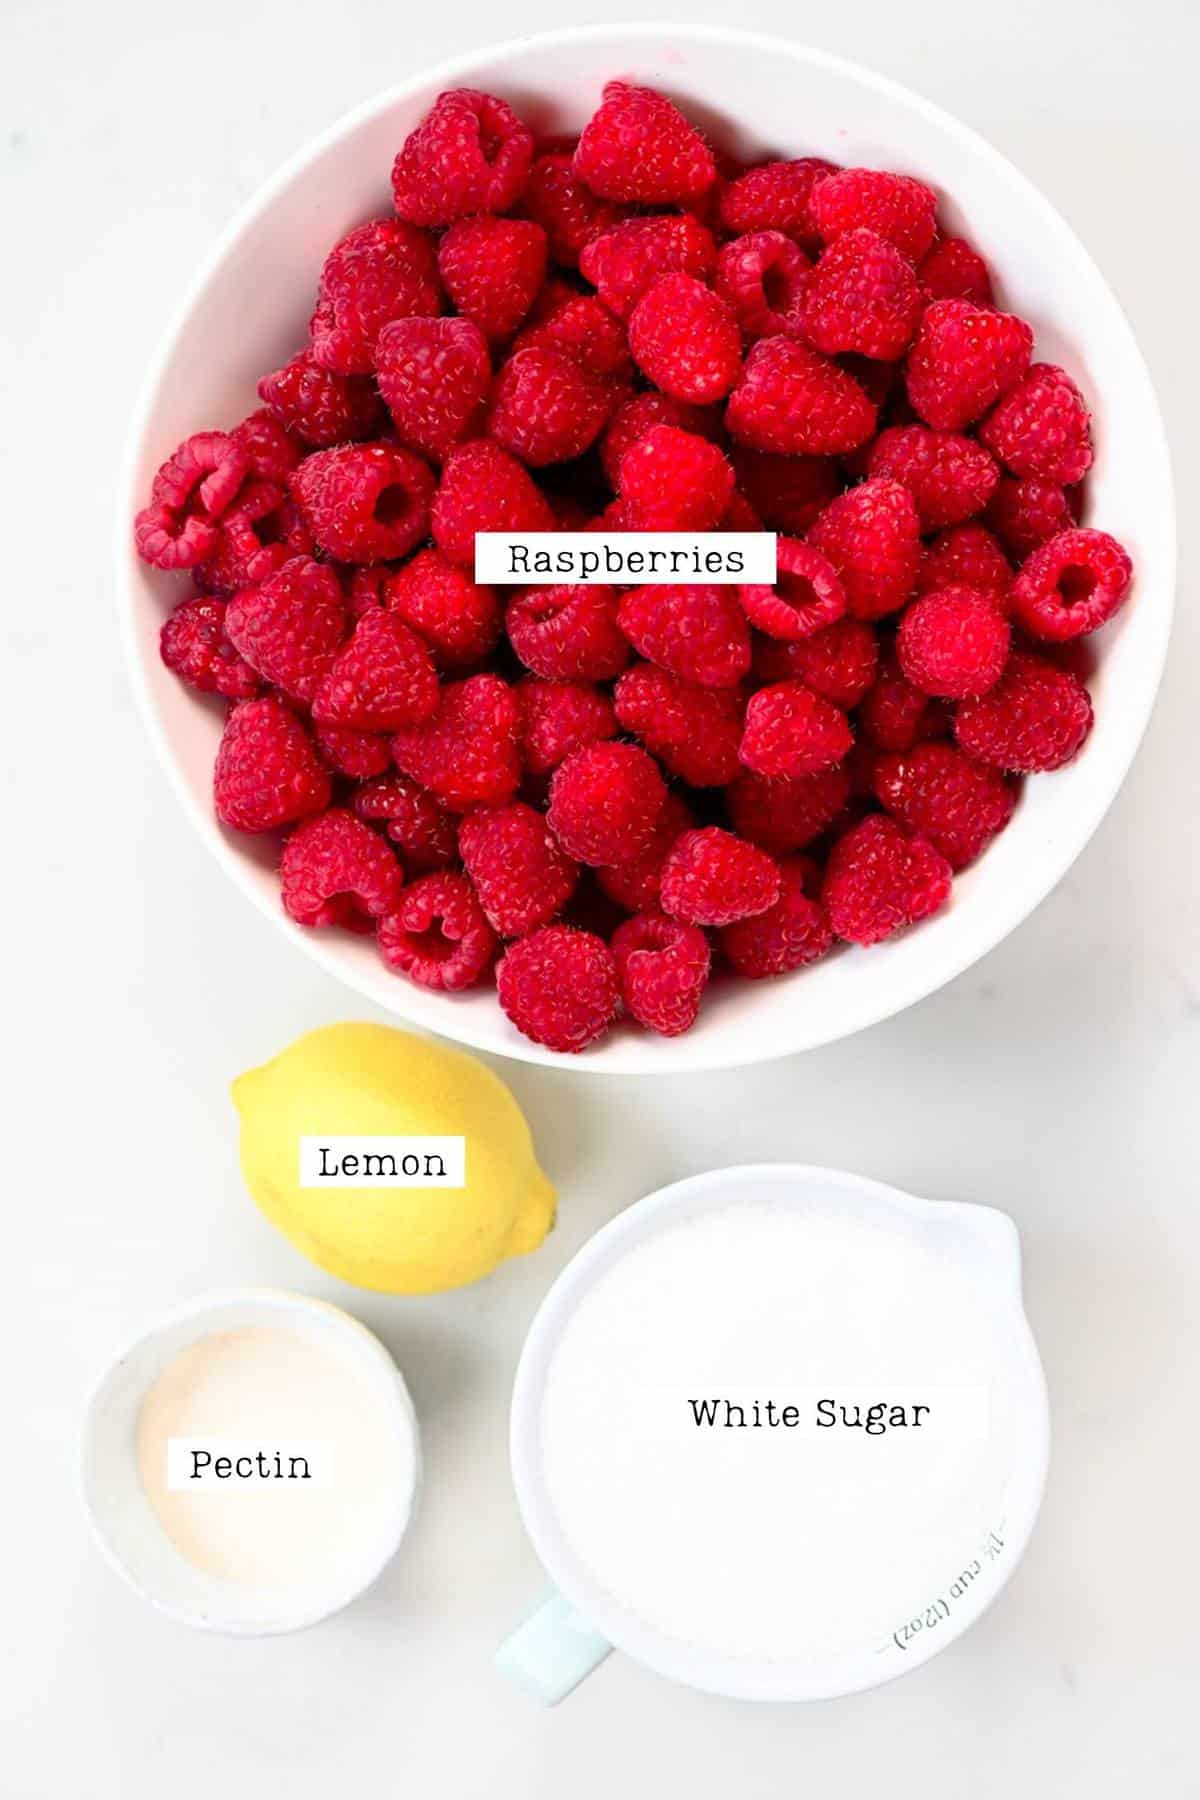 Ingredients for making Raspberry Jam